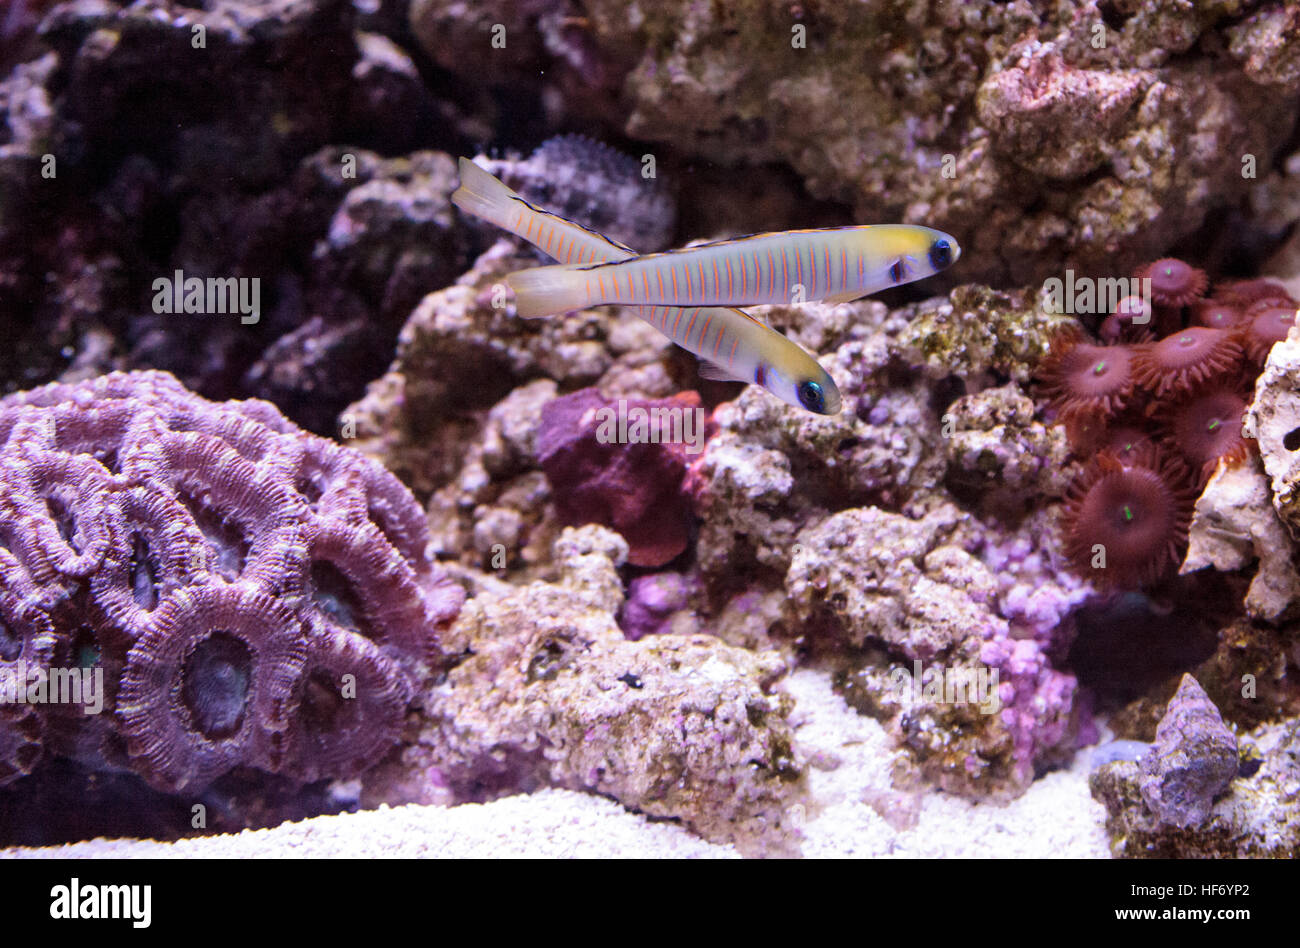 Shotsilk goby Ptereleotris zebra darts around a coral reef aquarium Stock Photo